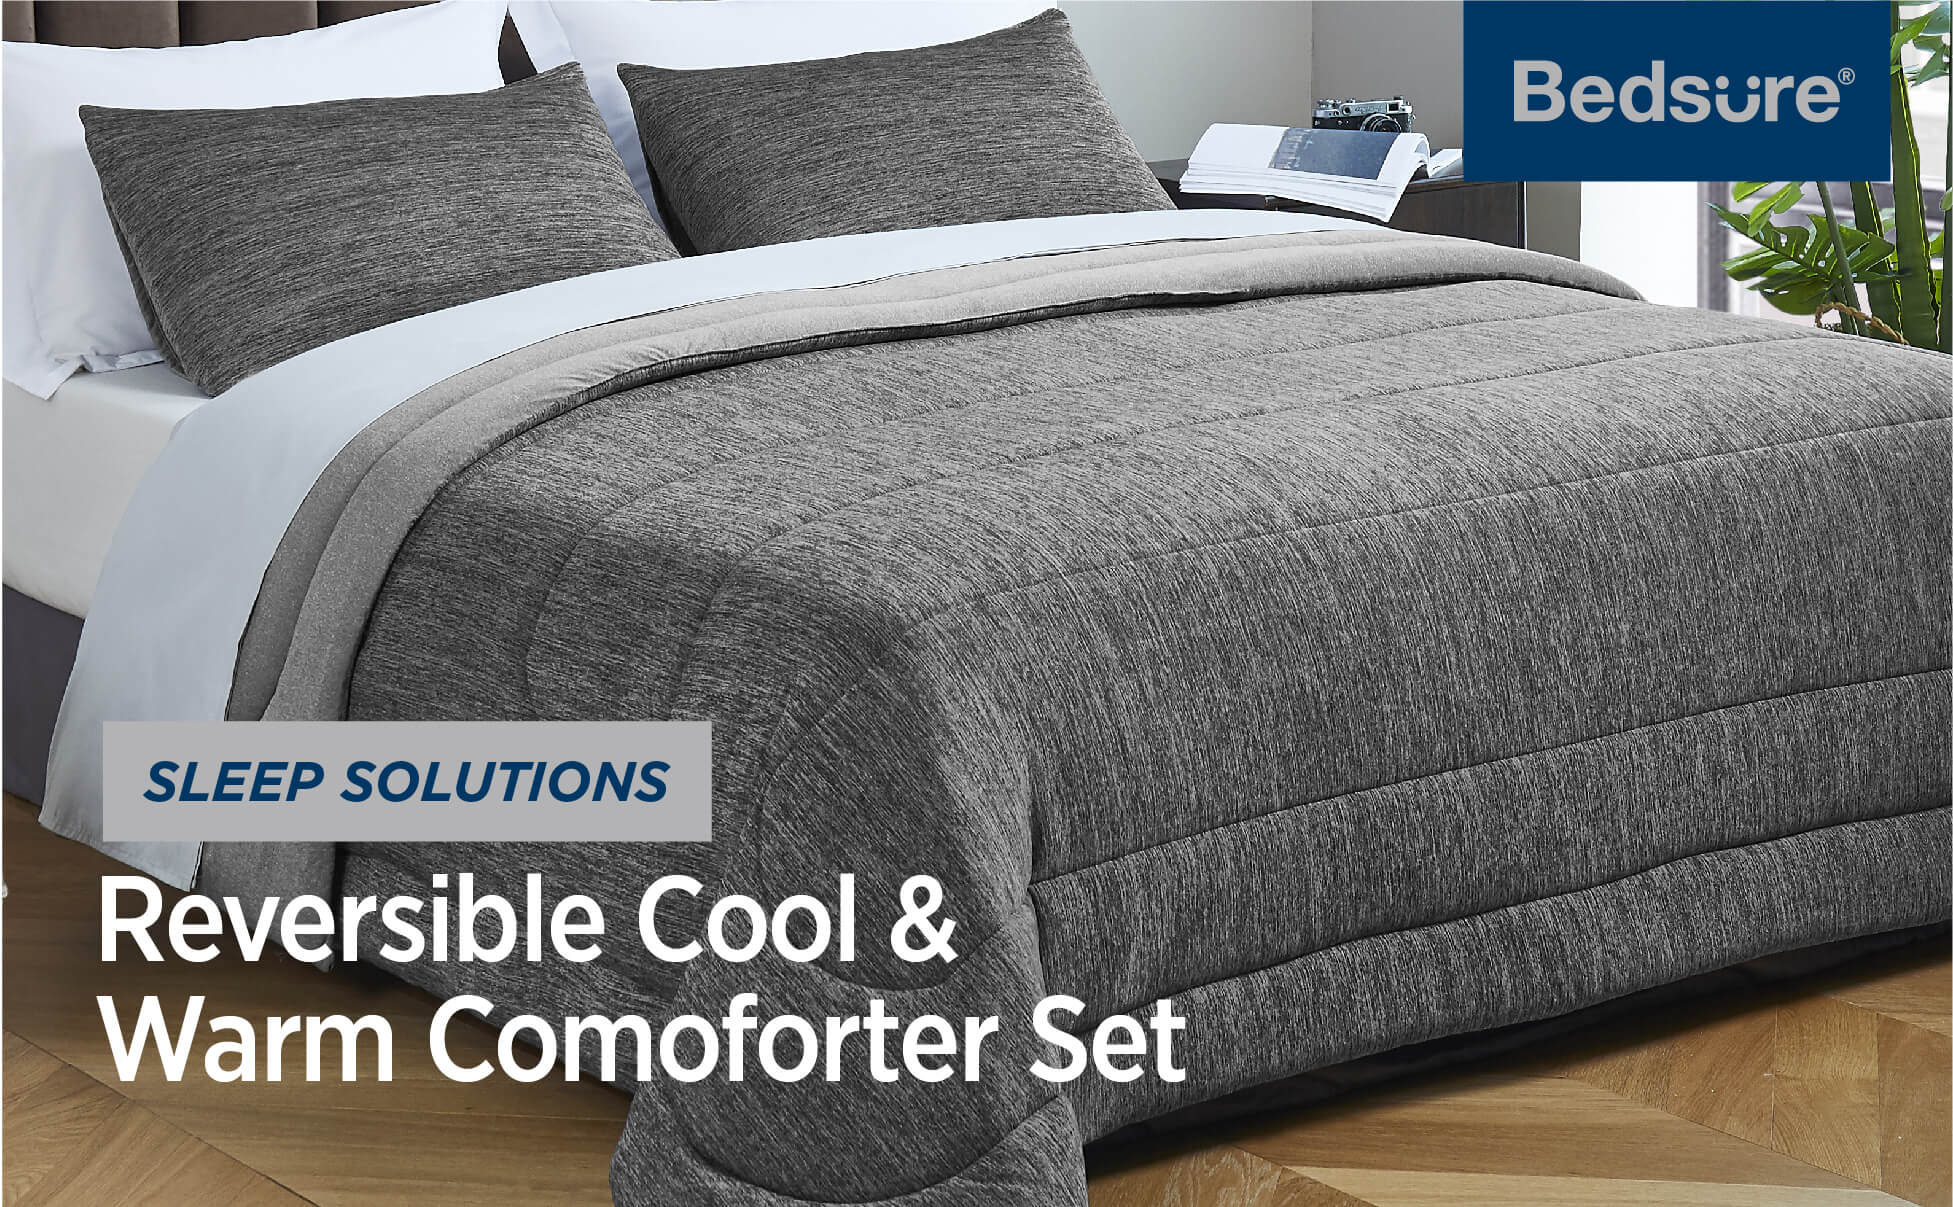 Details about   Bedsure Grey Queen Comforter Set Reversible Warm&Cooling Comforter All-Season D 